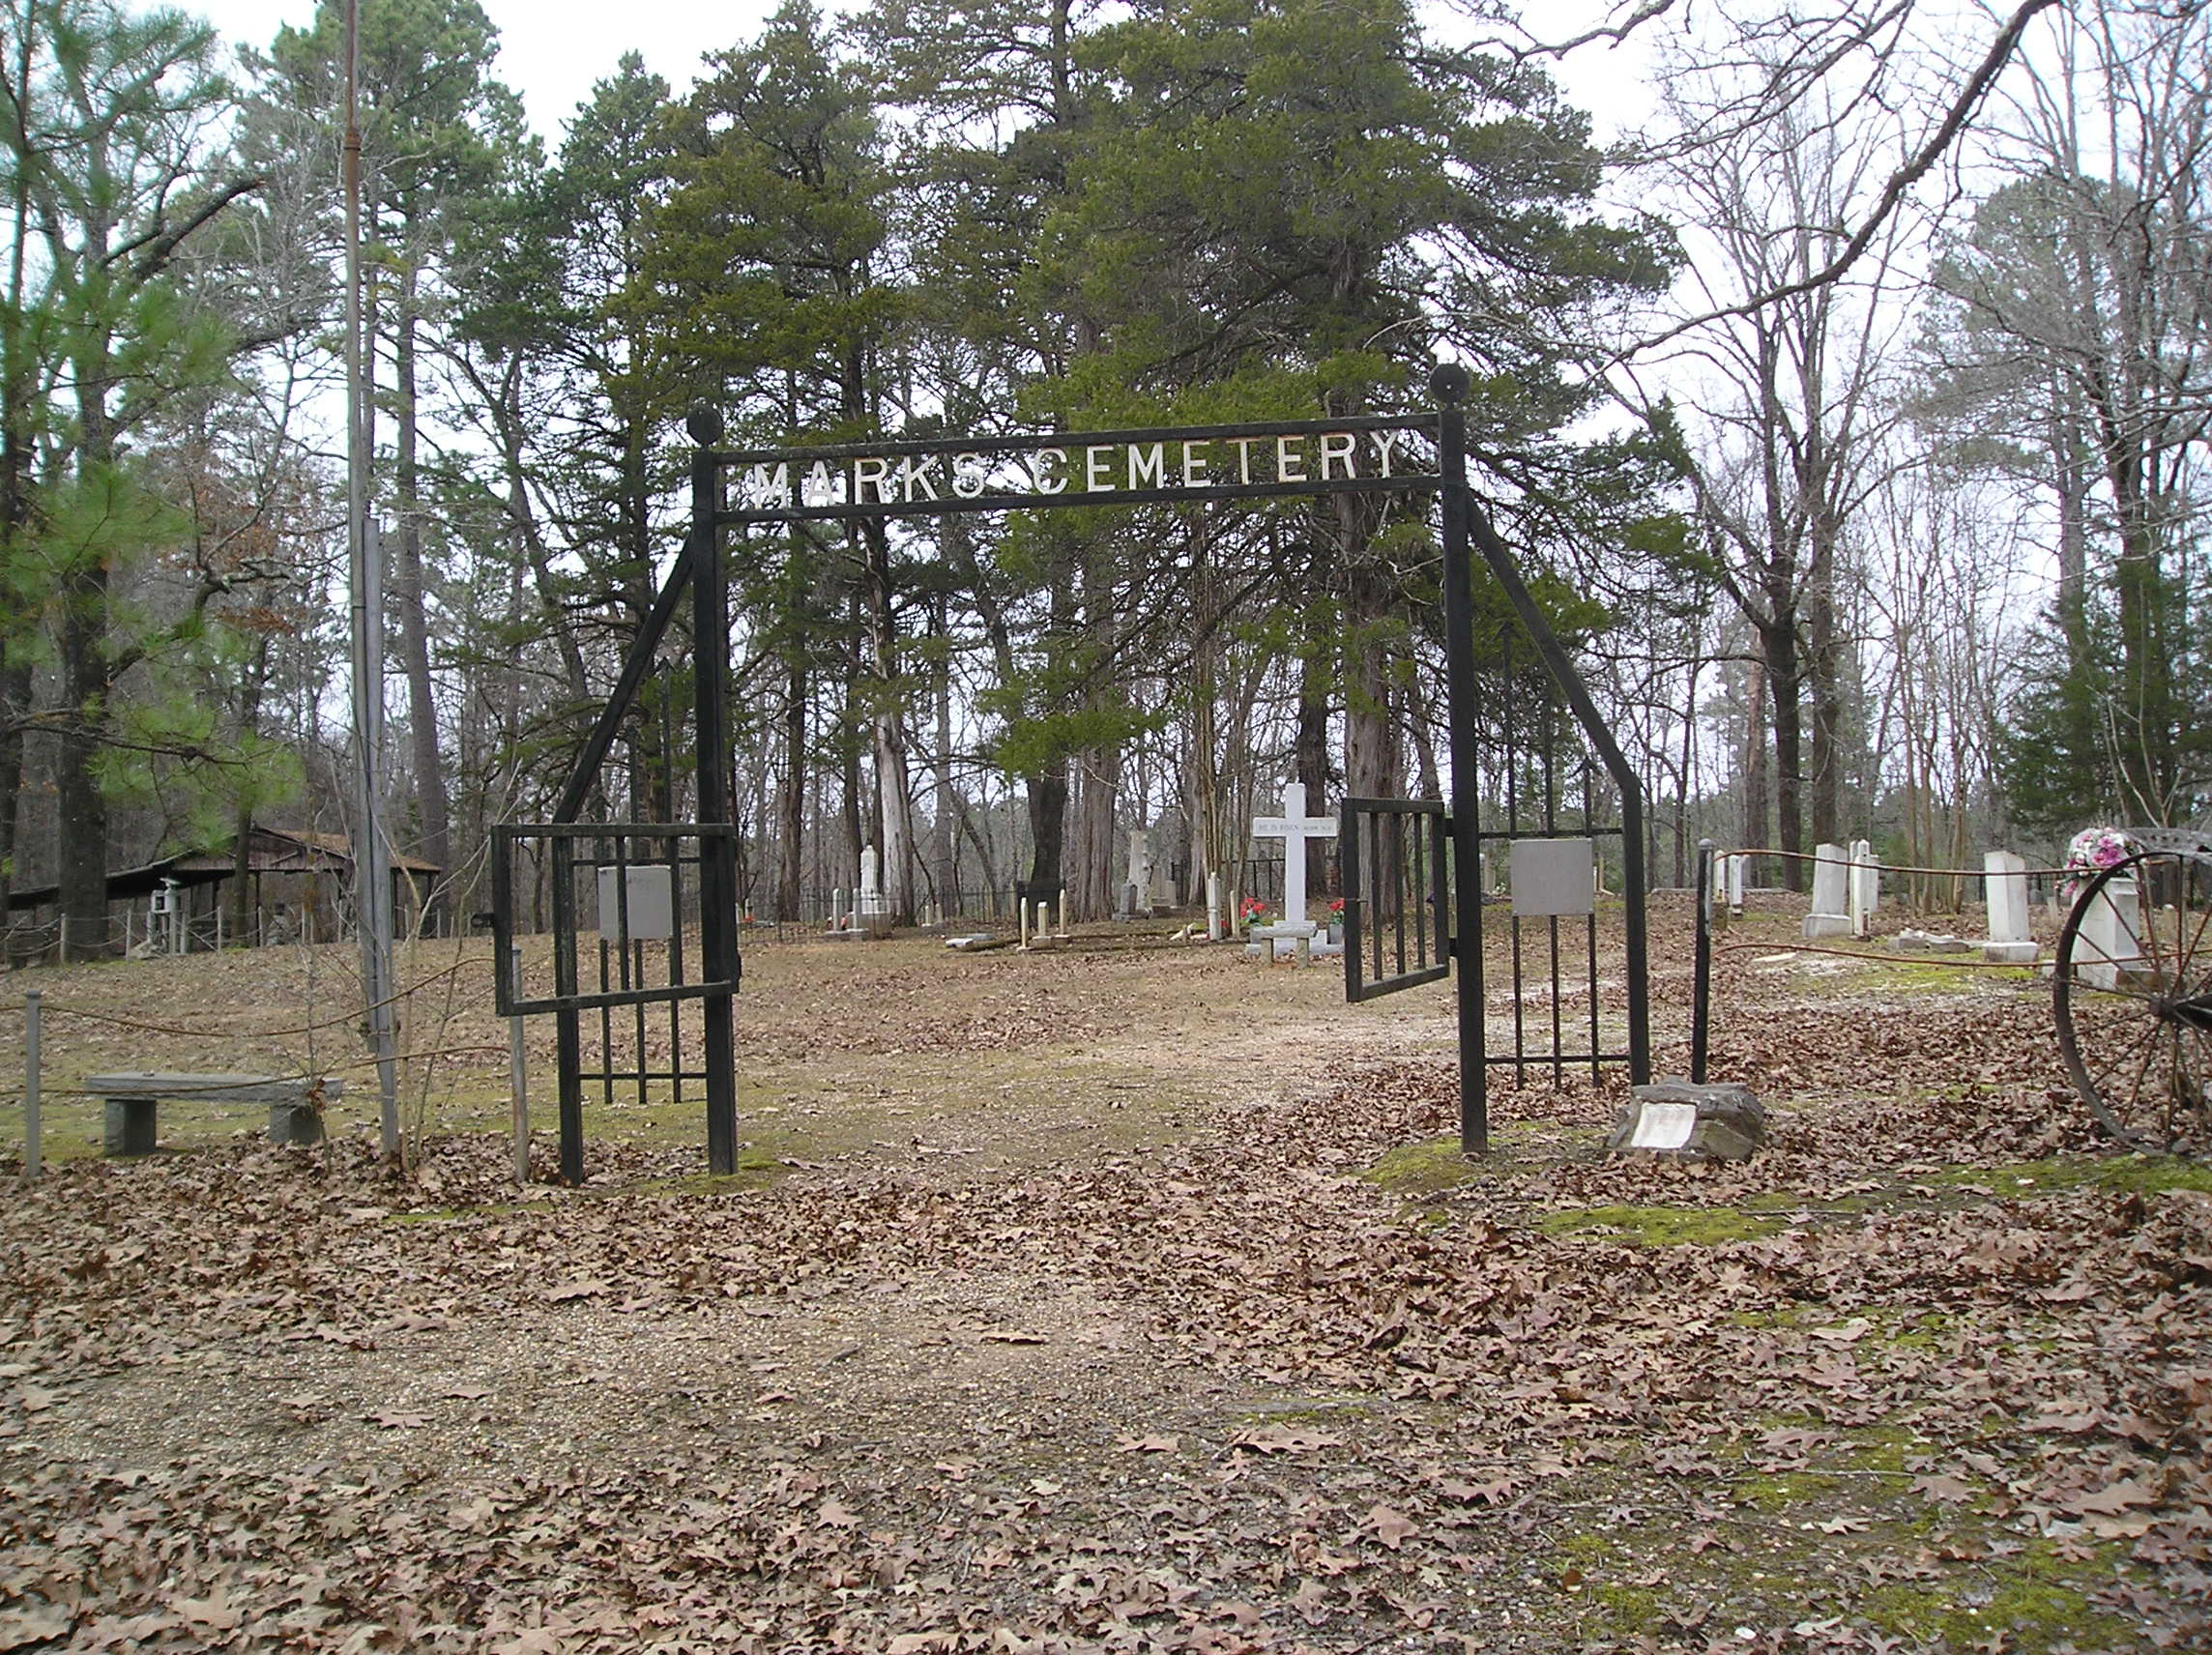 Marks' Cemetery